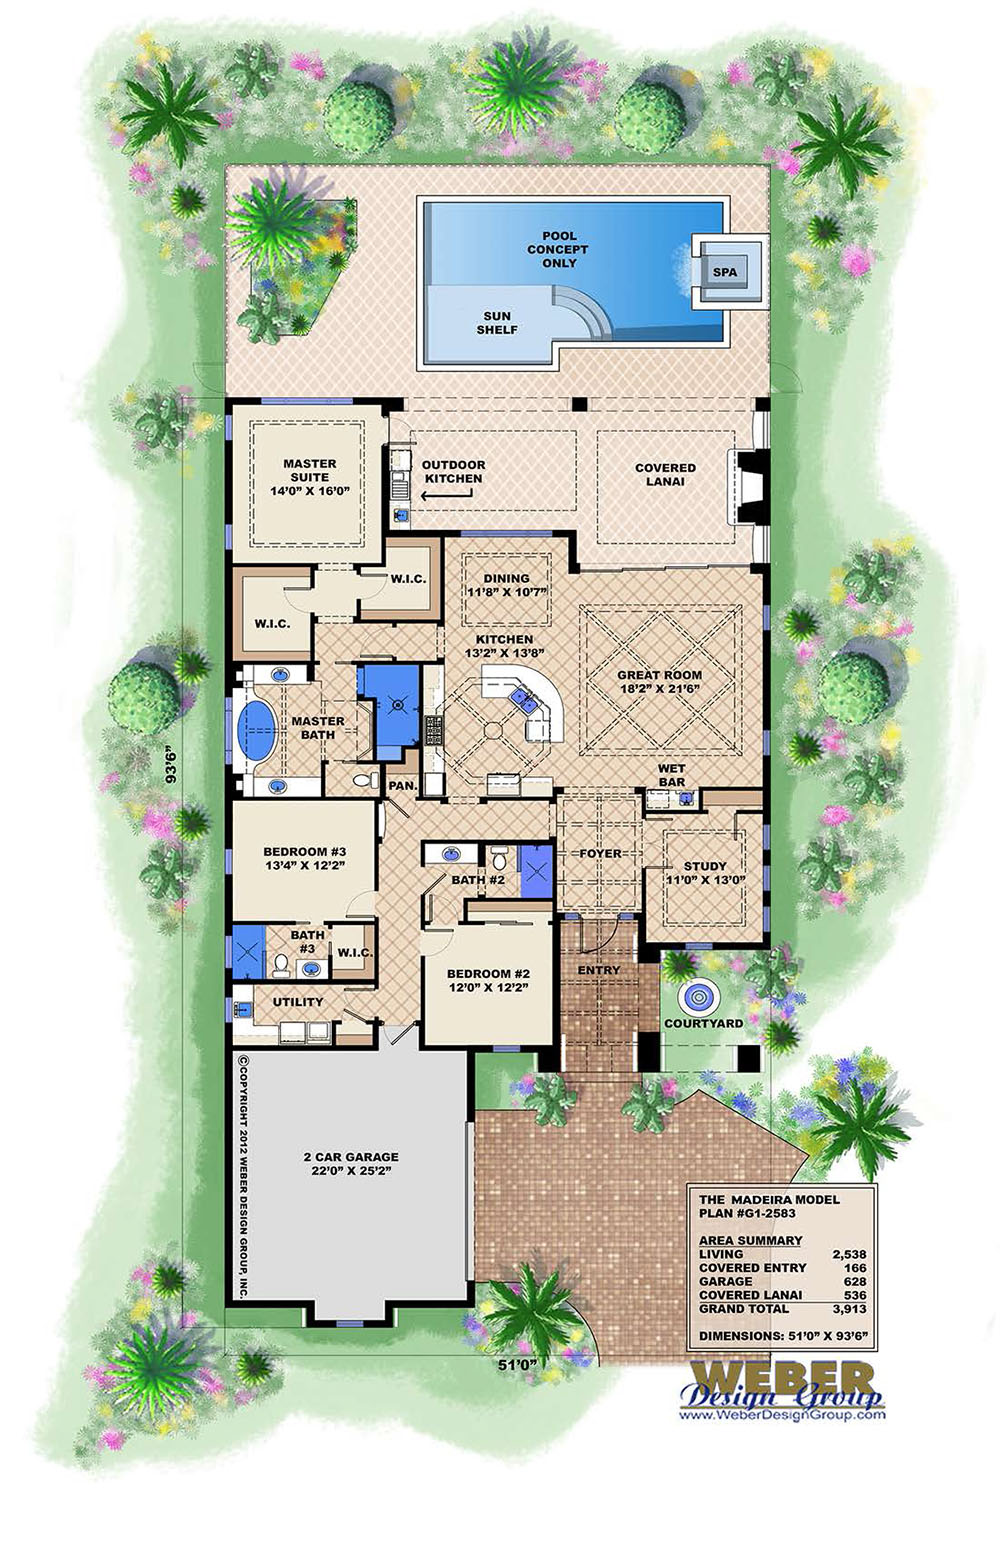 spanish house plan: 1 story coastal spanish style home floor plan